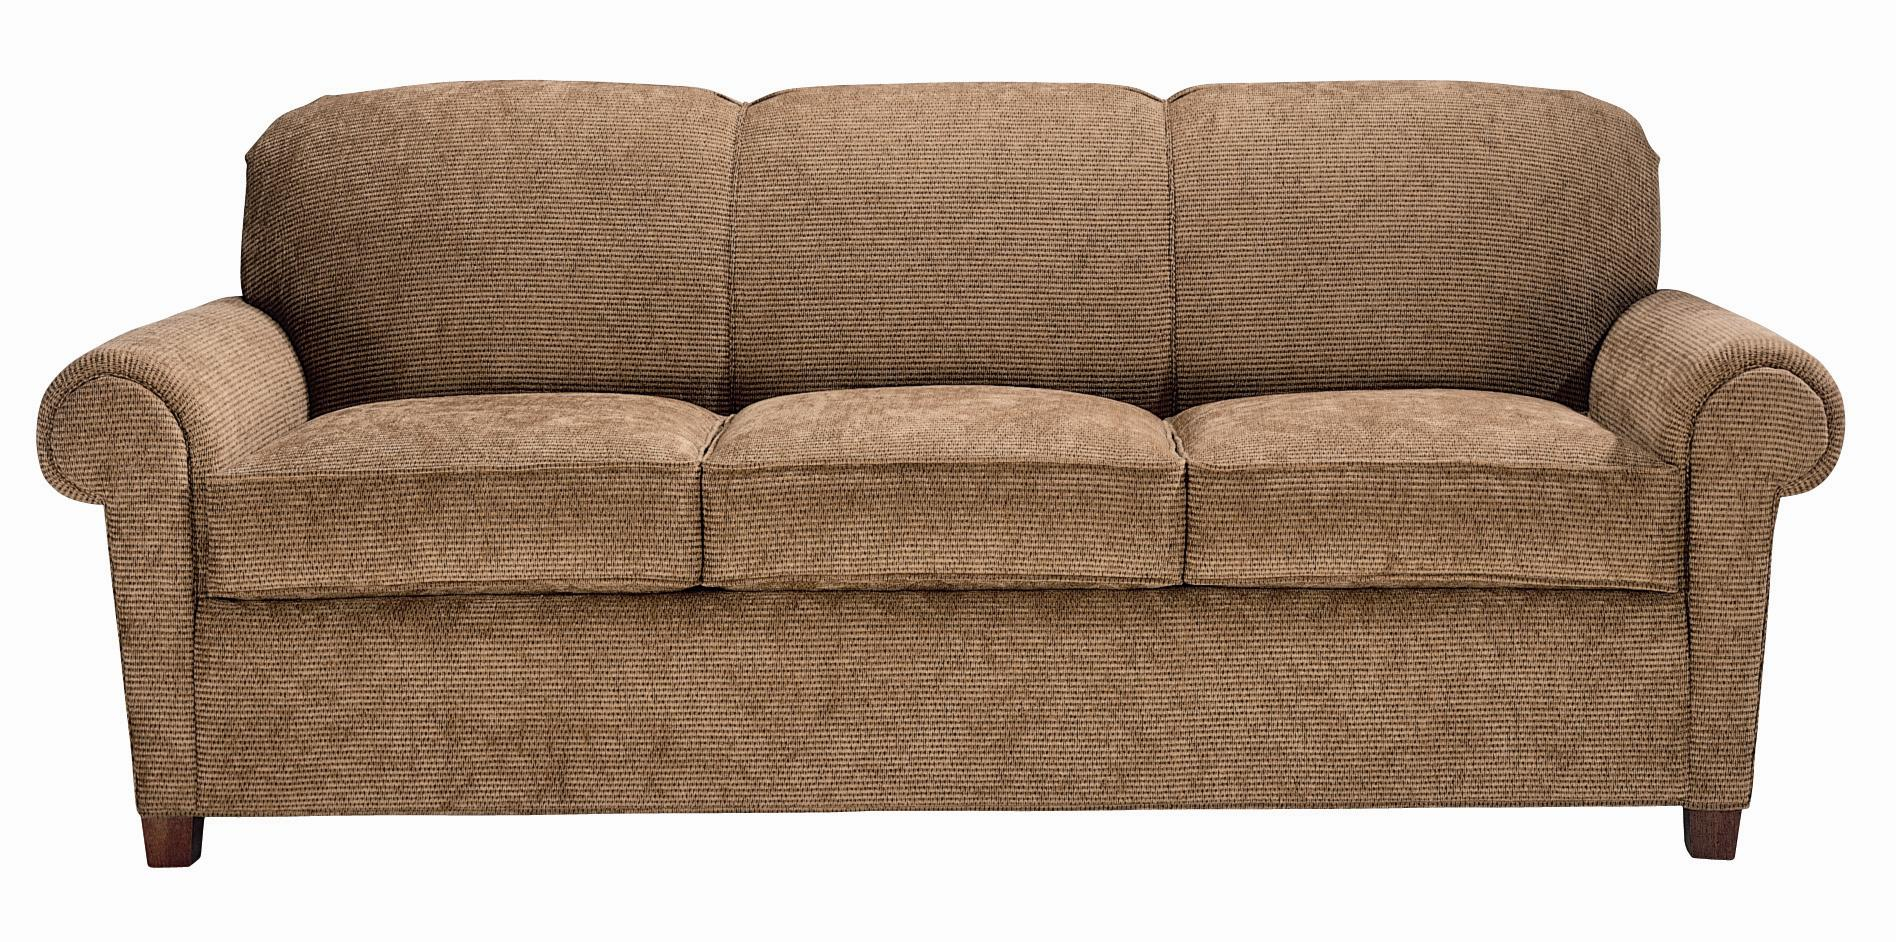 norwalk leather sleeper sofa